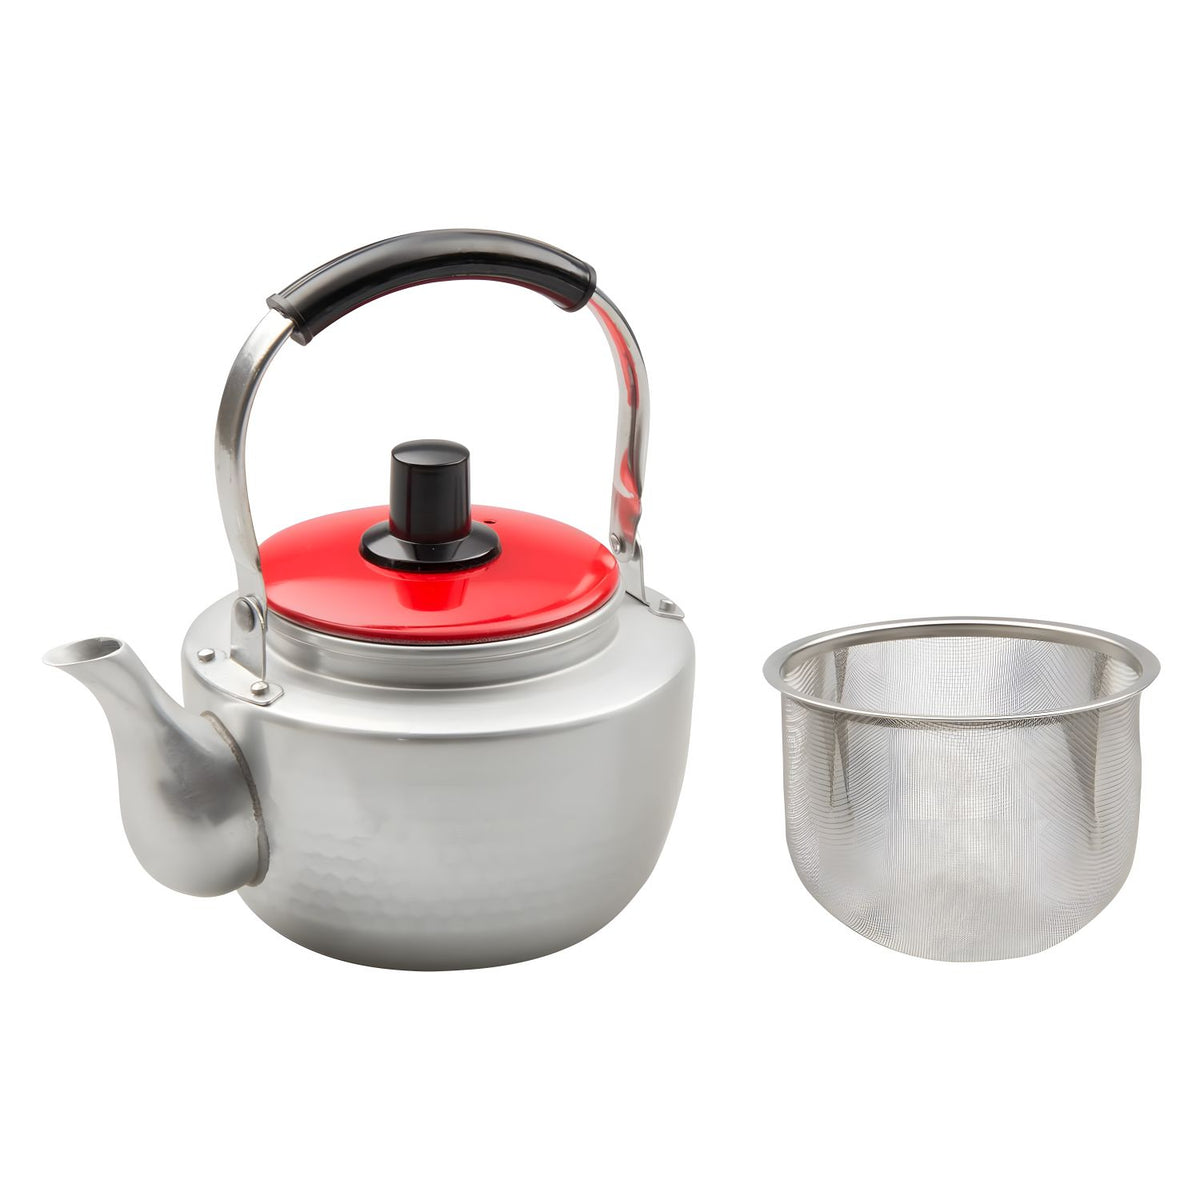 Maekawa Kinzoku Aluminum Kyusu Teapot Red with Tea Strainer